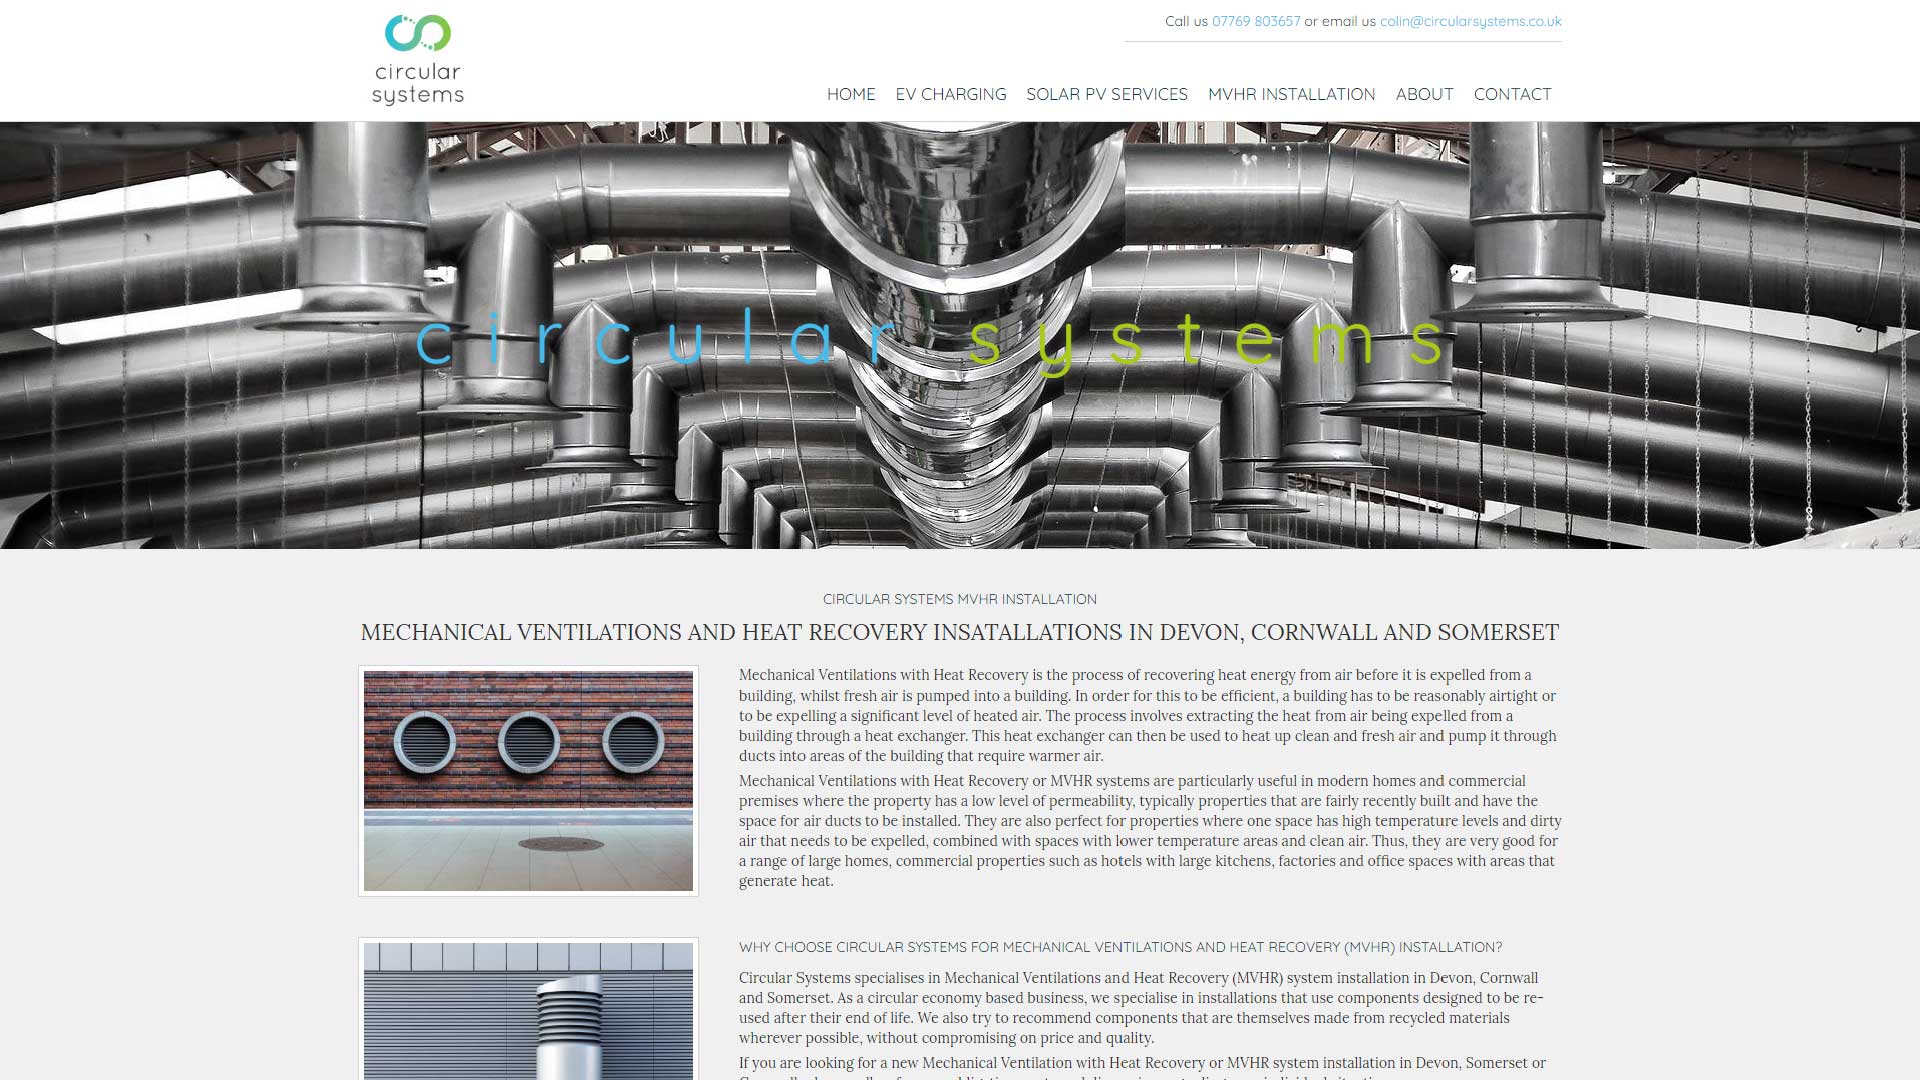 Green Energy web site designs